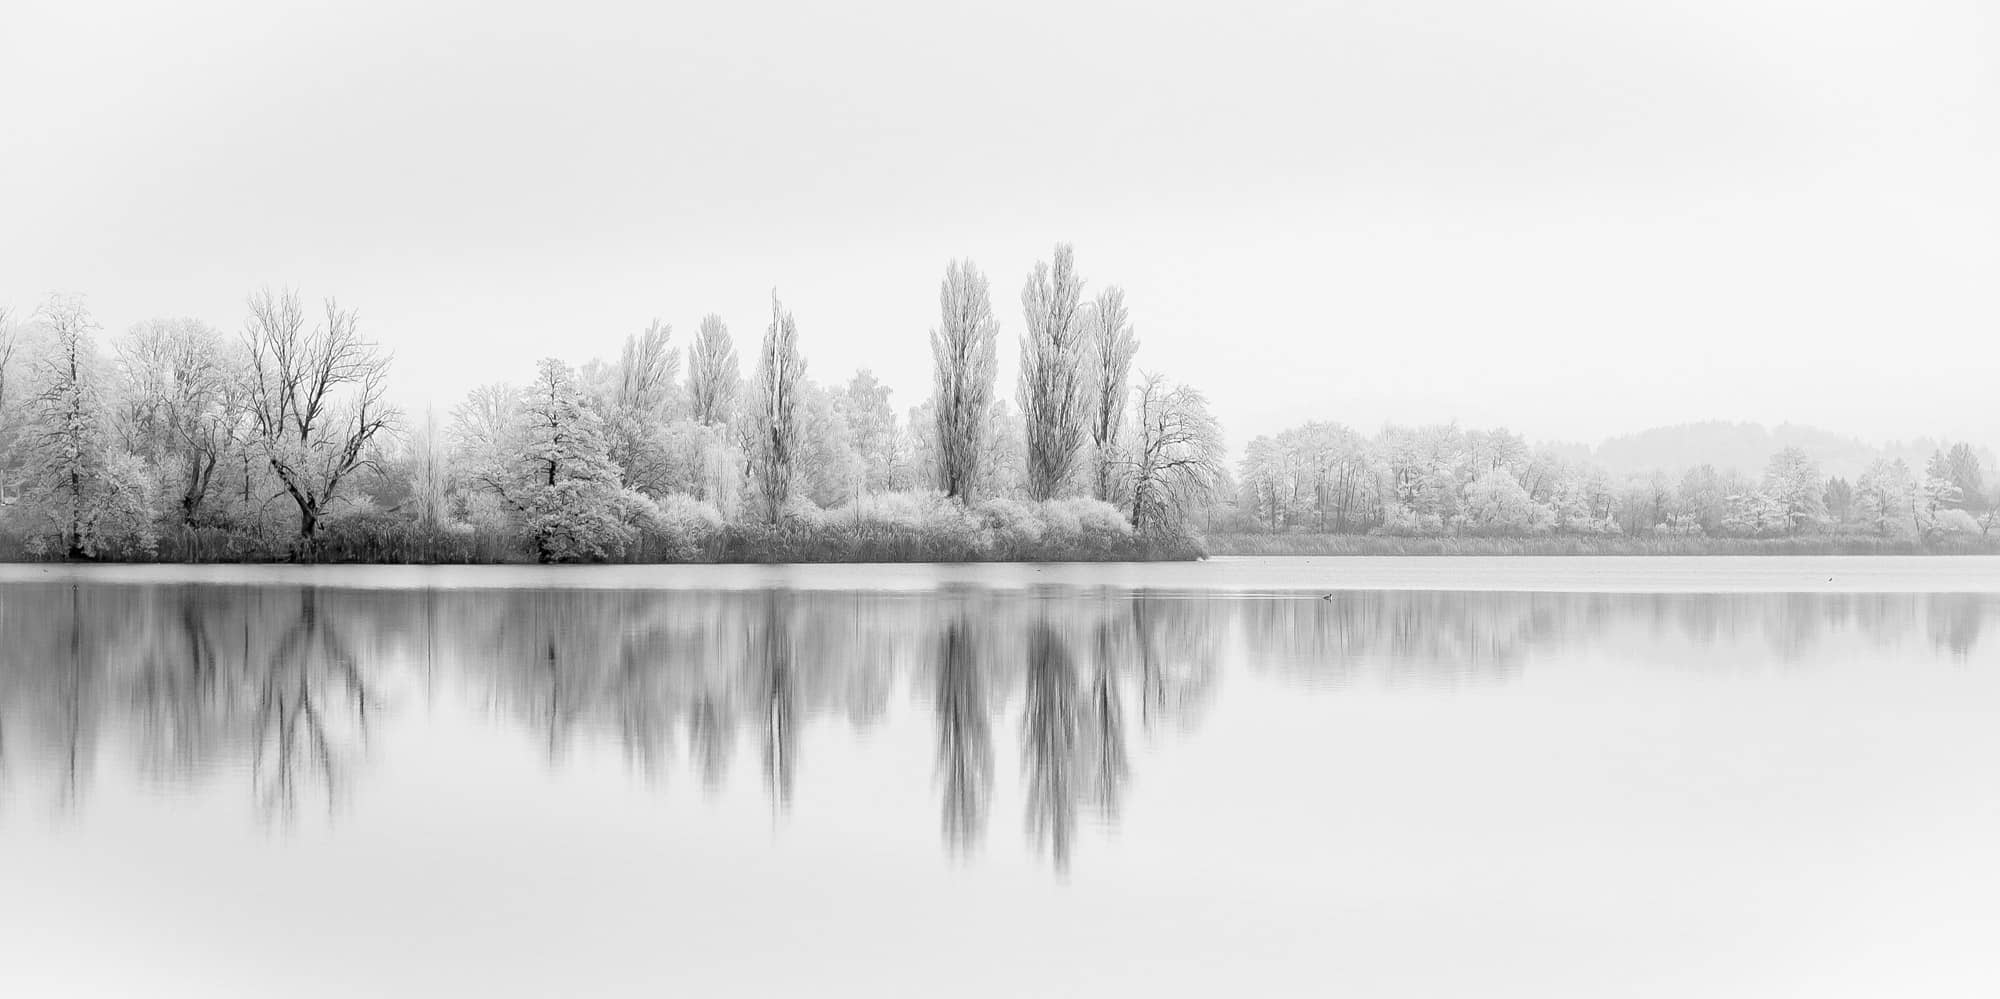 Black and white lake